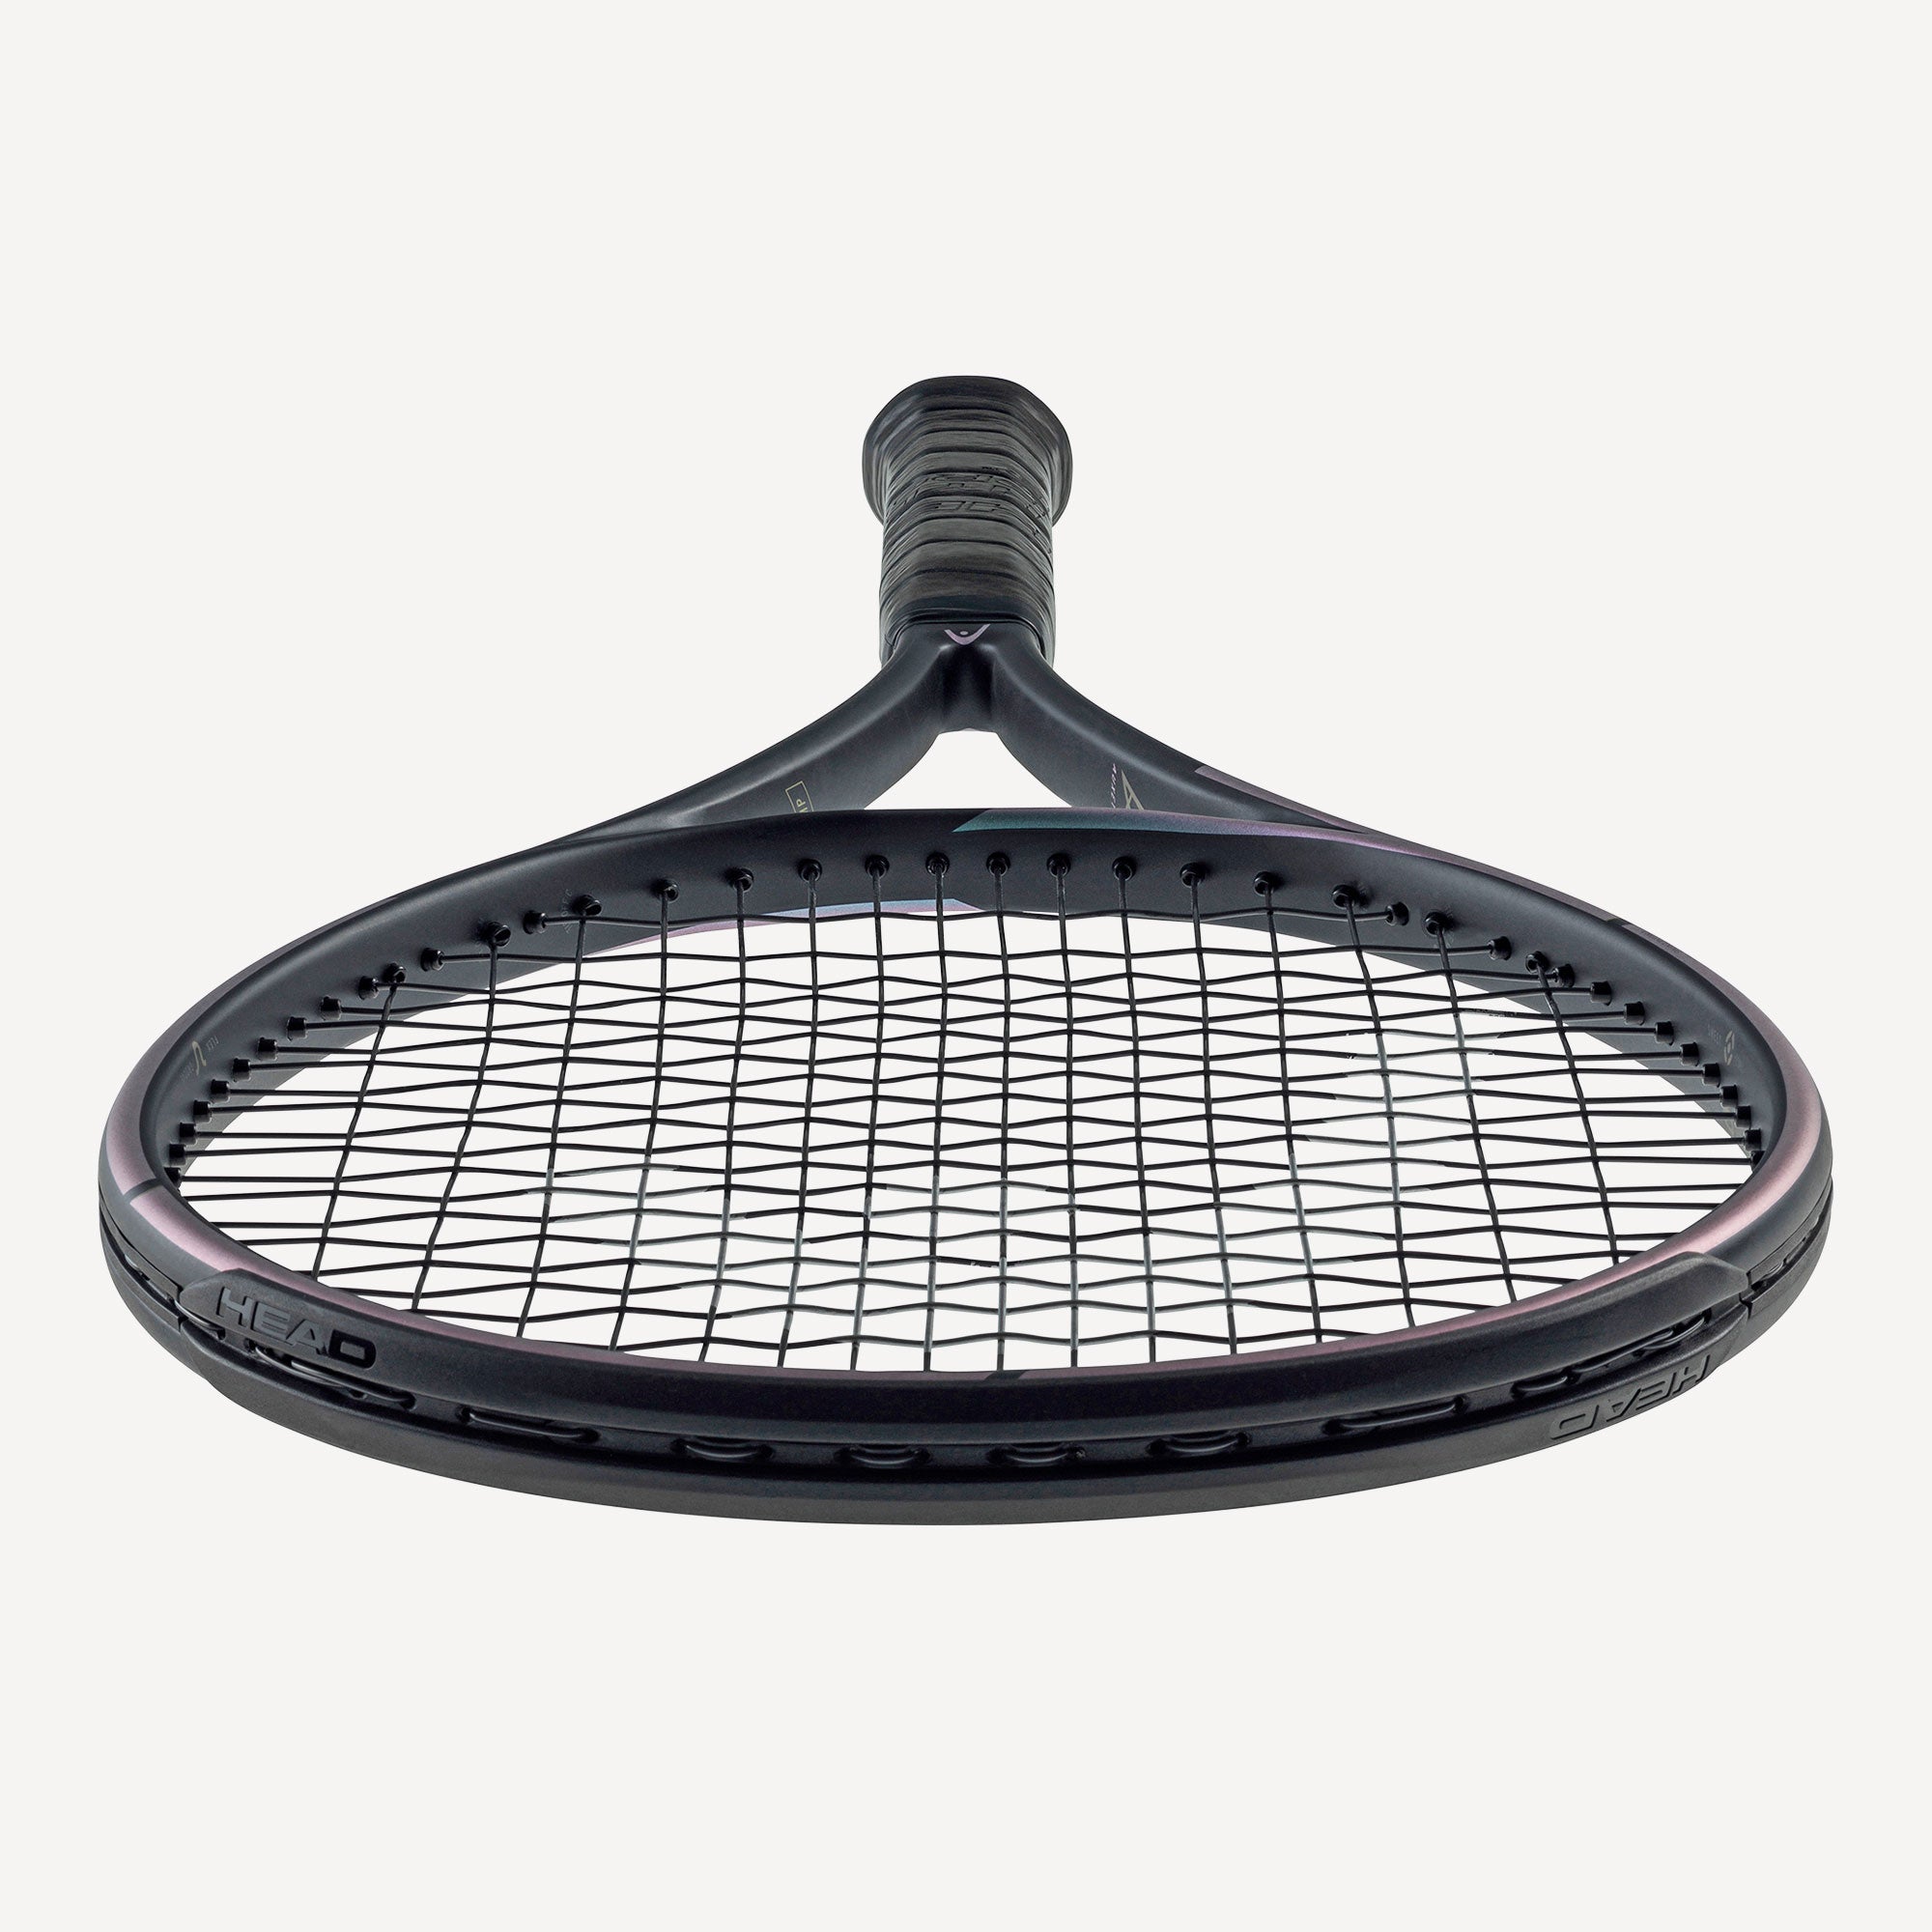 HEAD Gravity MP Tennis Racket  (7)